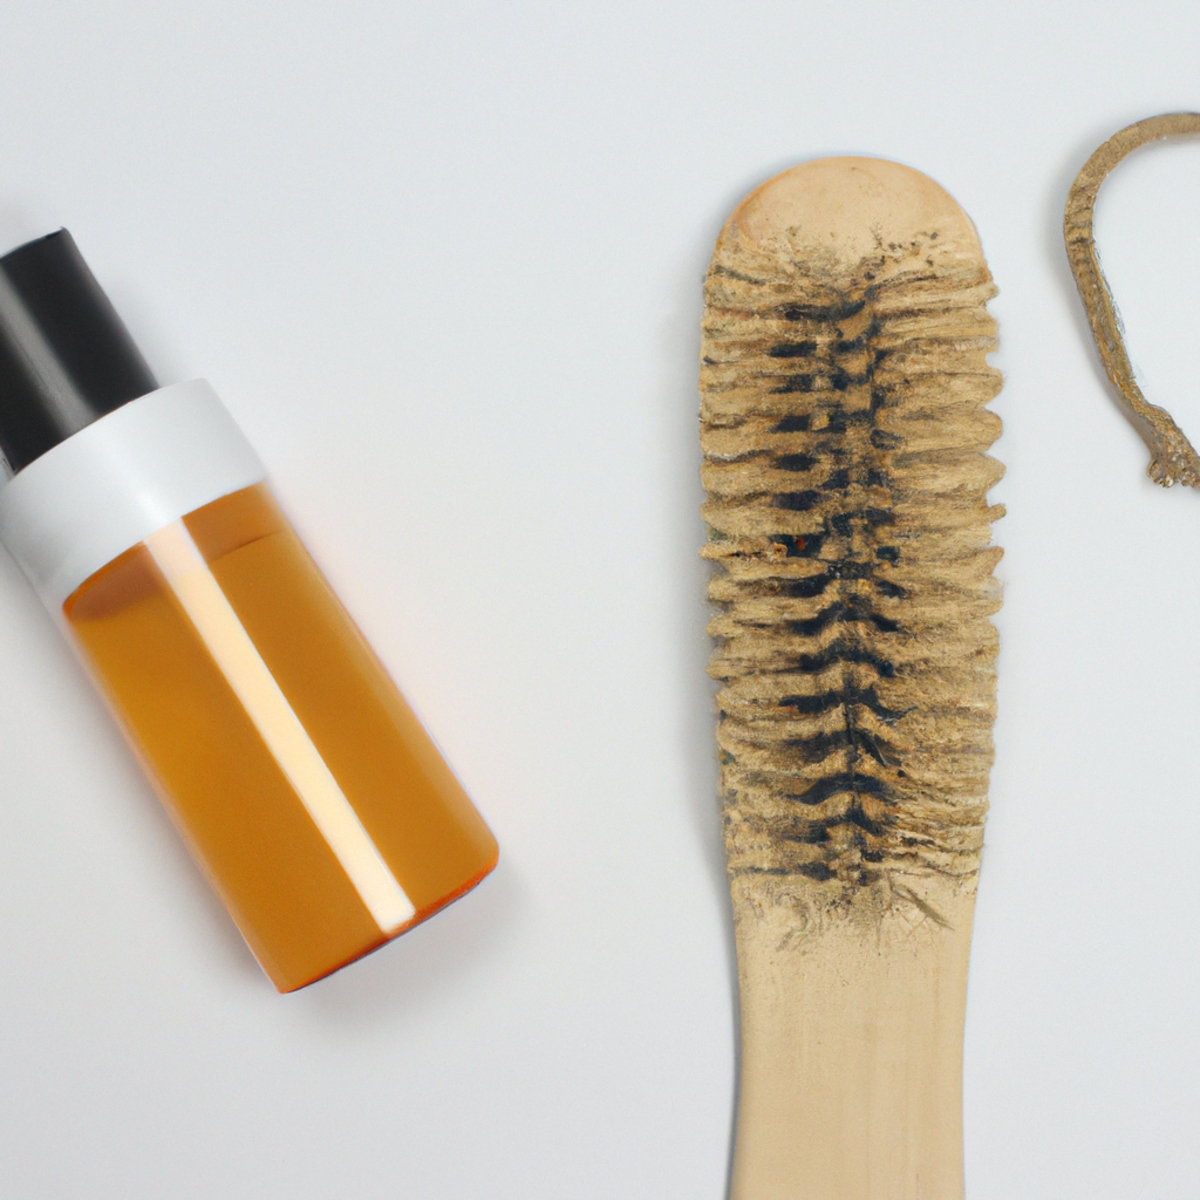 Hair care essentials: wooden brush, hair oil, and hair tie.